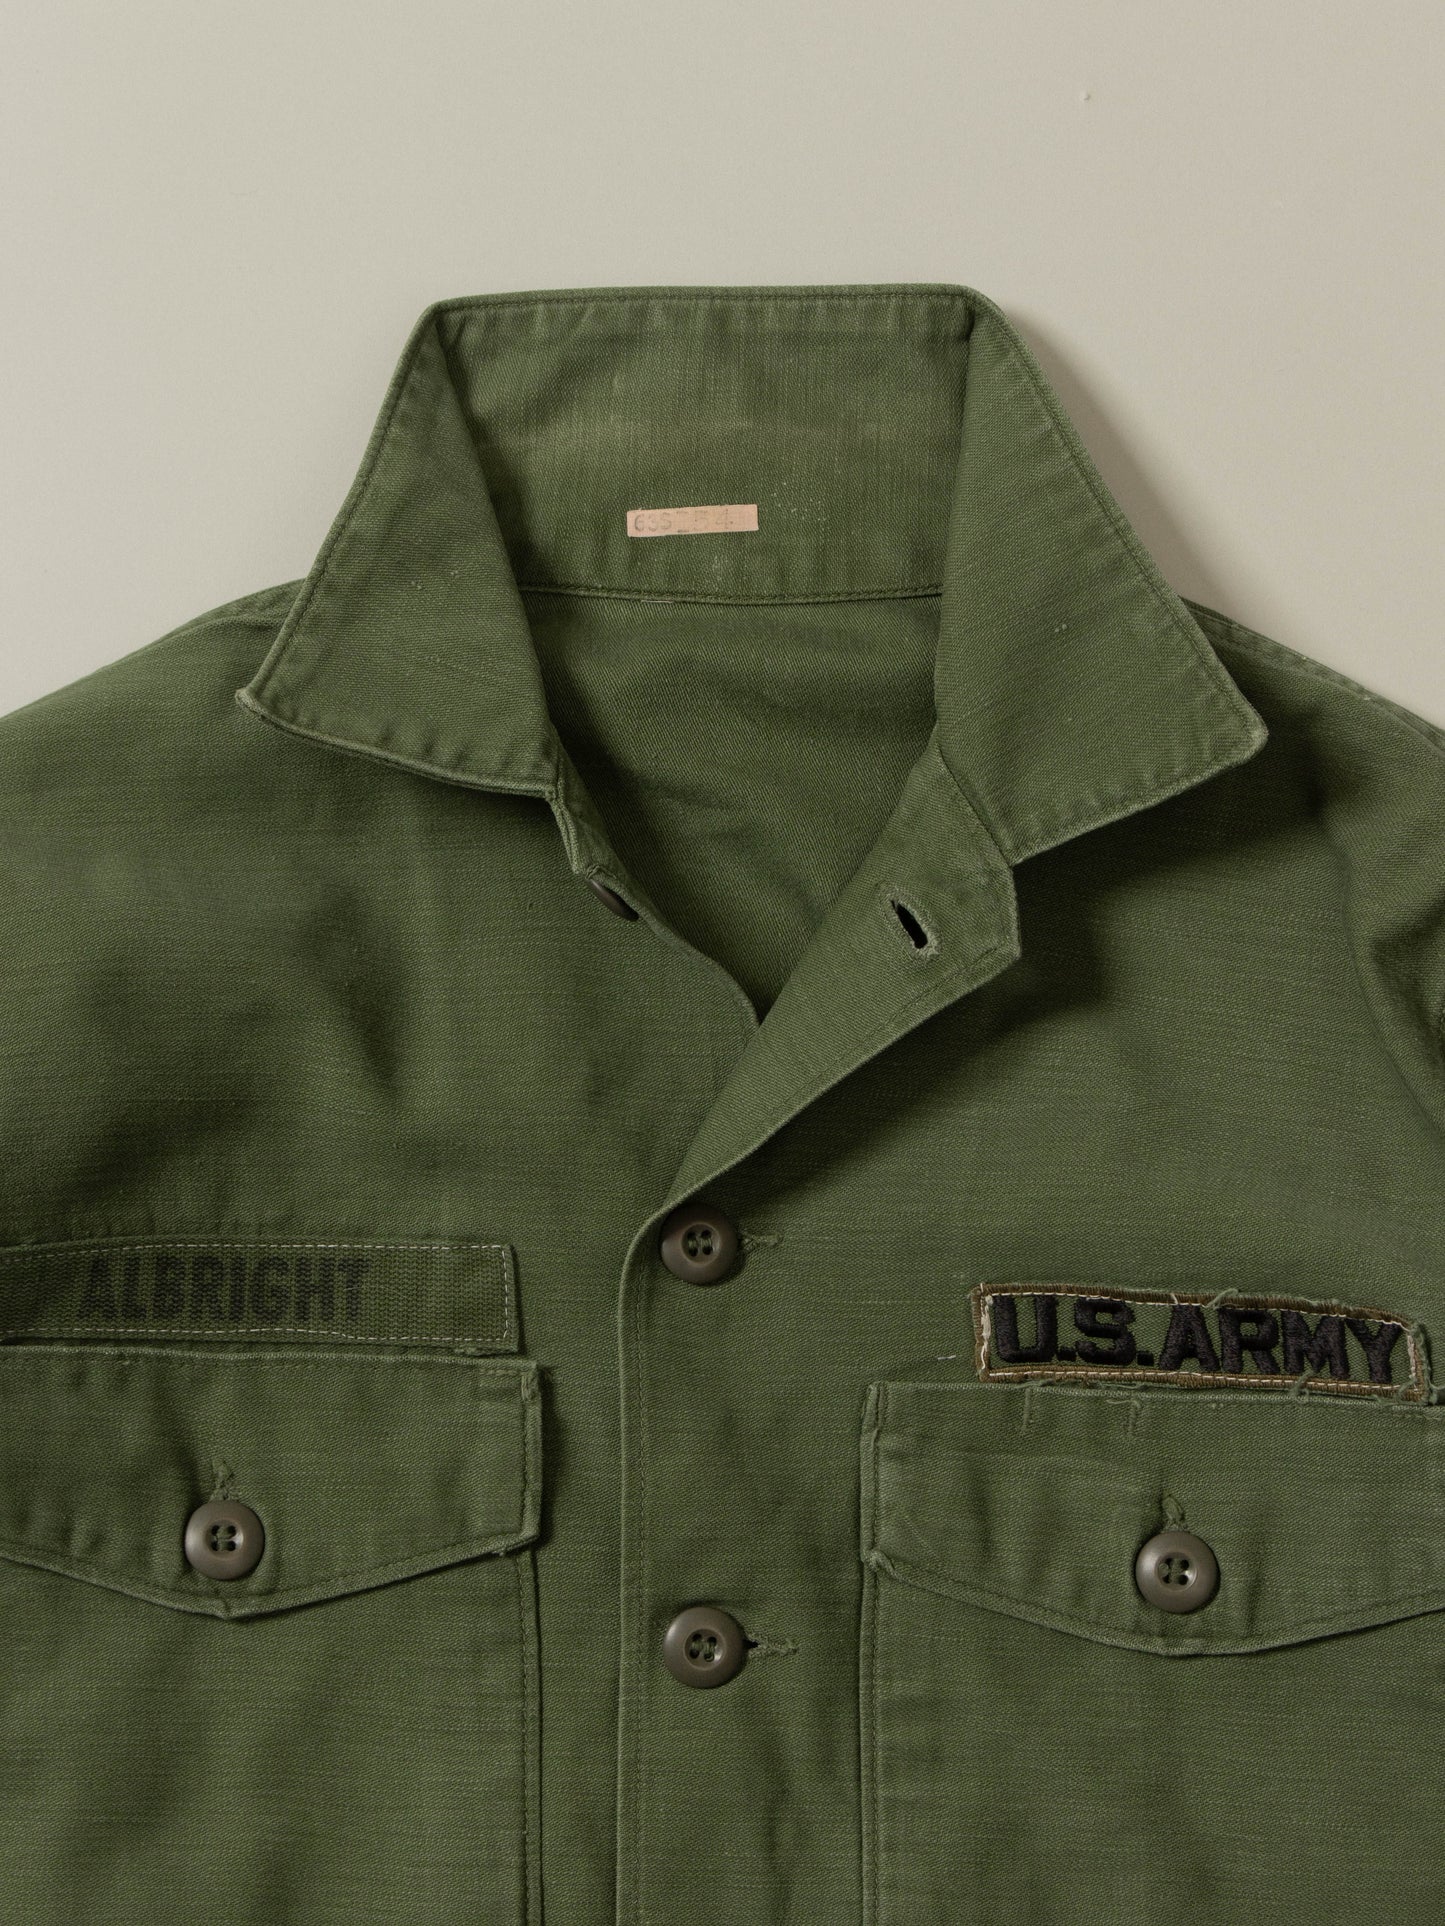 Vtg 1970s US Army OG-107 Fatigue Shirt (S)